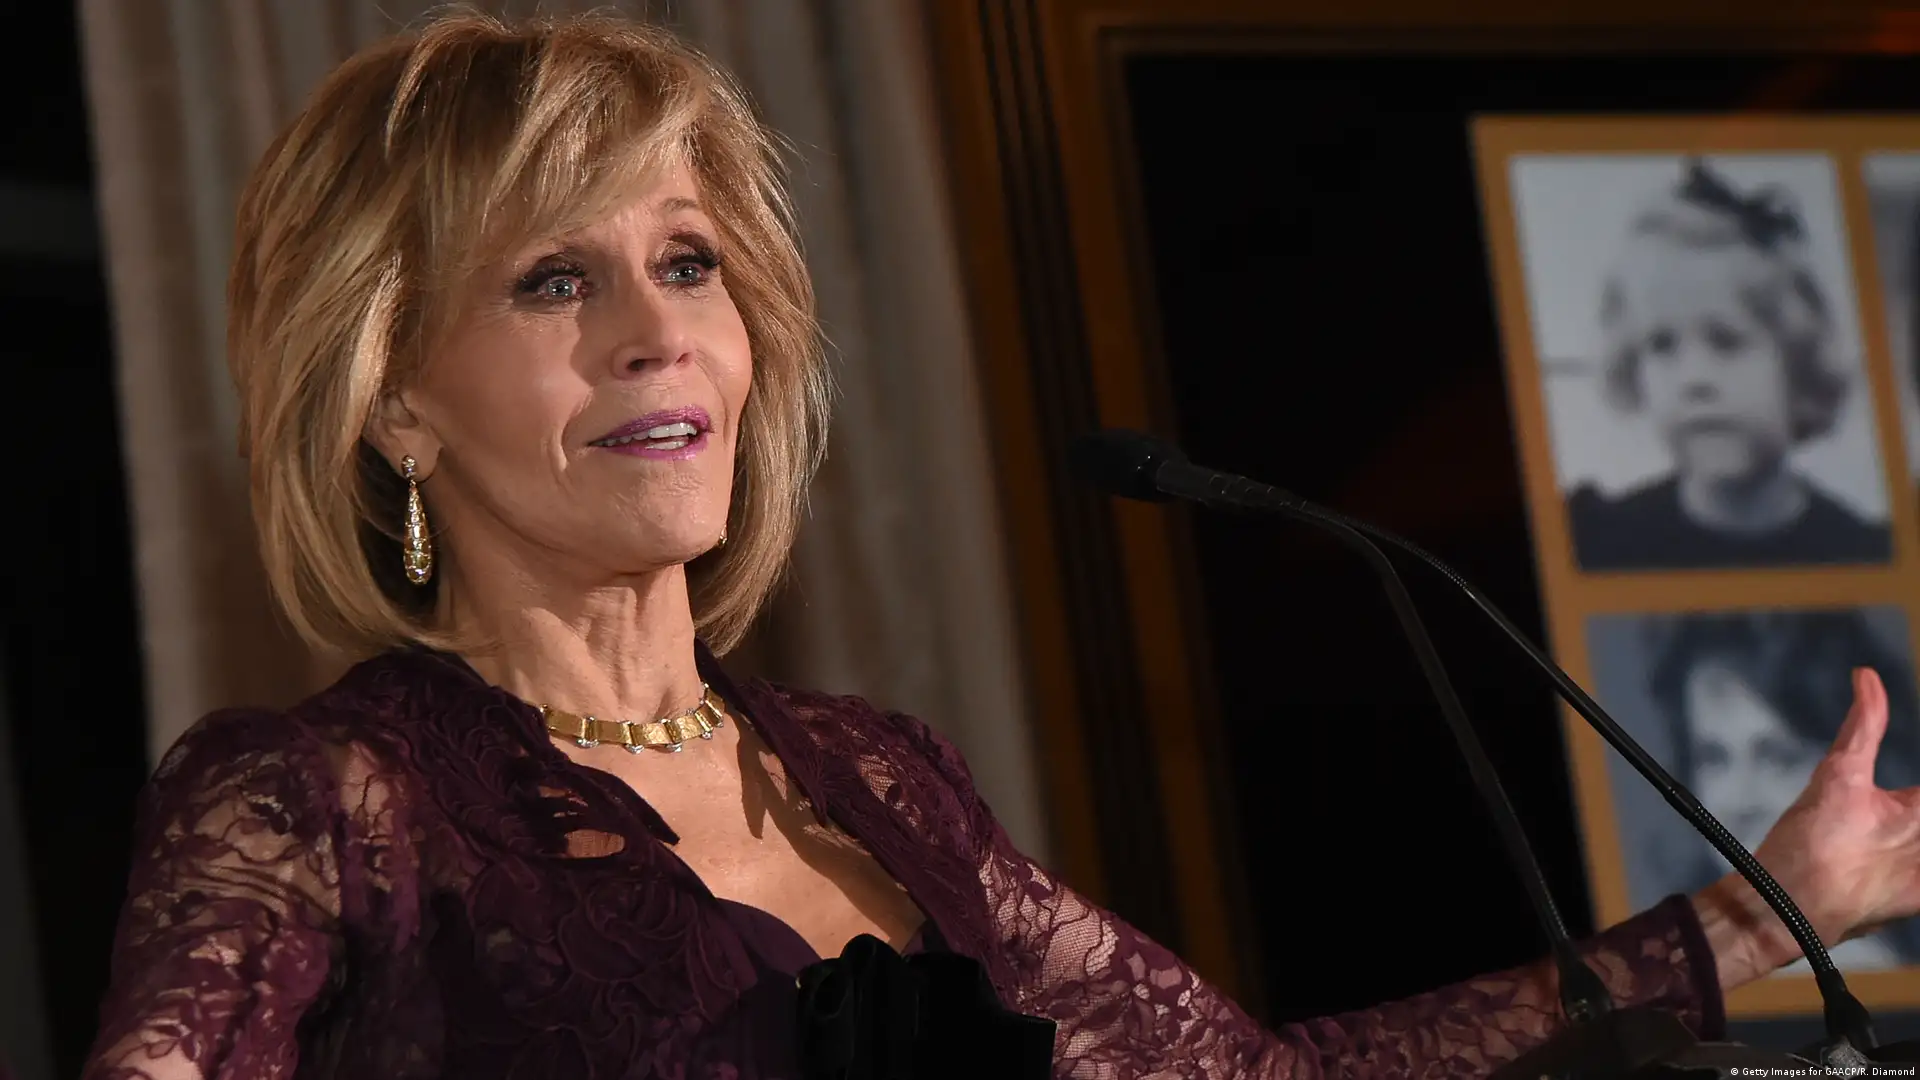 A sex symbol turned political activist Jane Fonda at 80 – DW photo